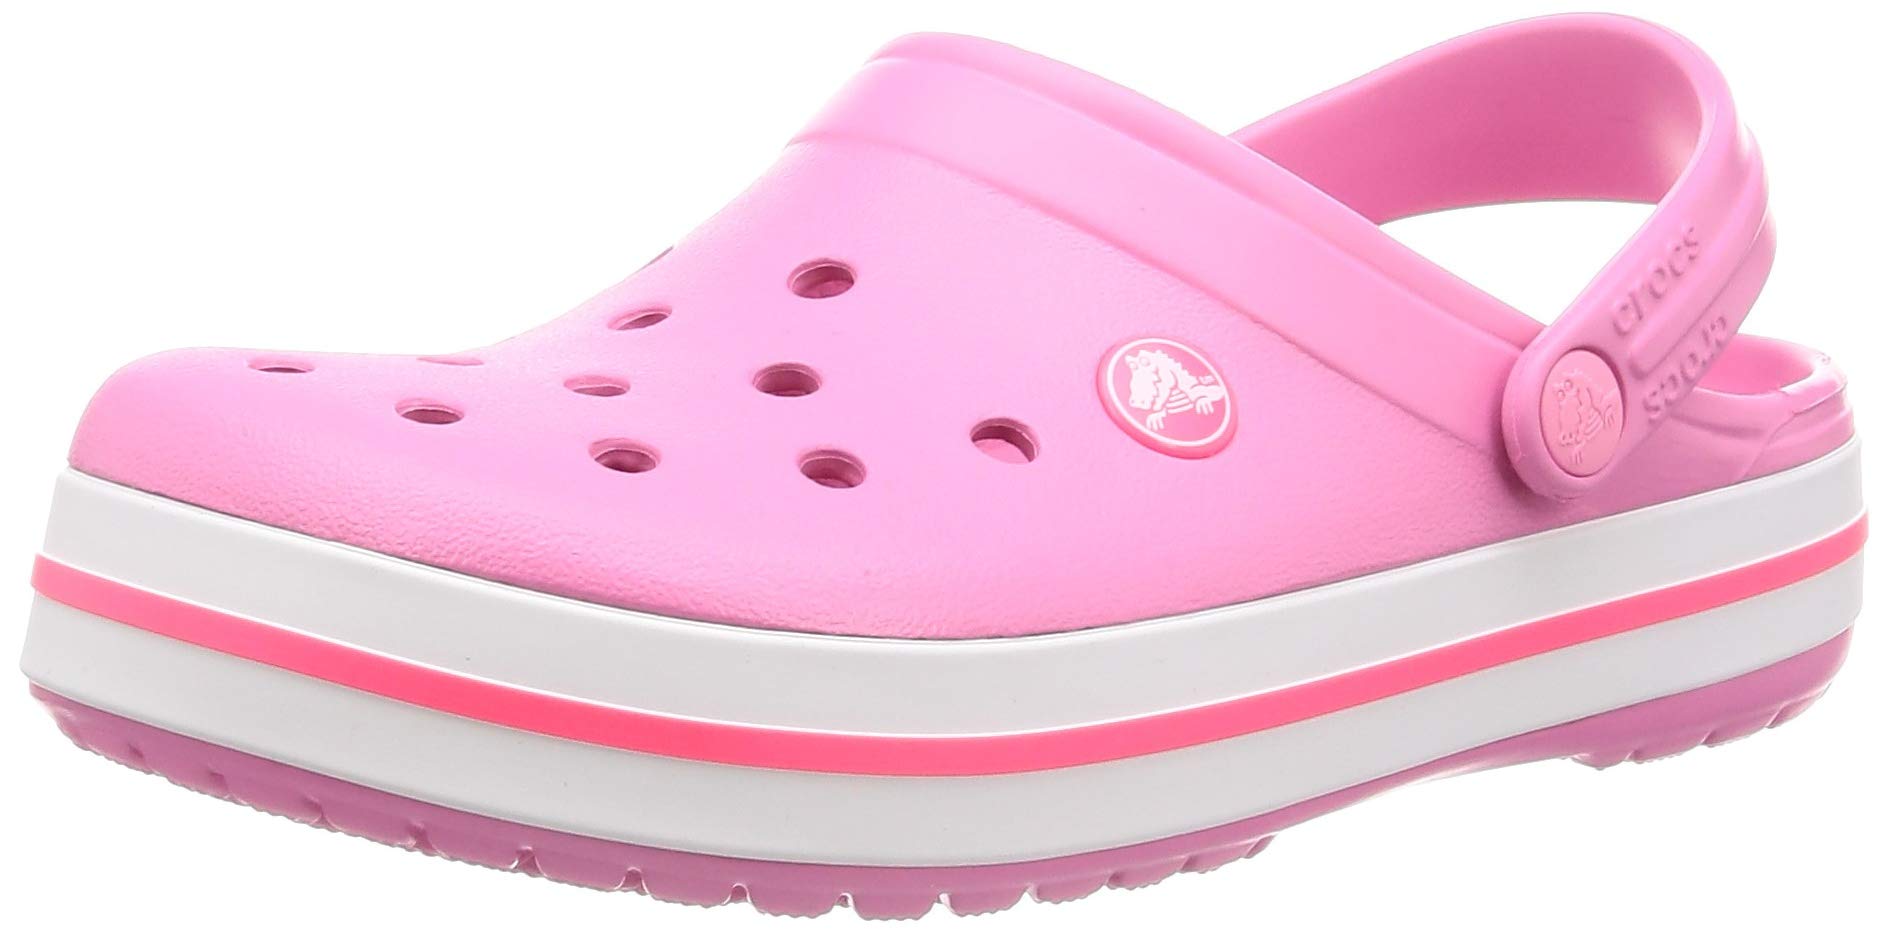 Crocs Unisex Crocband Clogs - Pink Lemonade/White - M8W10 | eBay